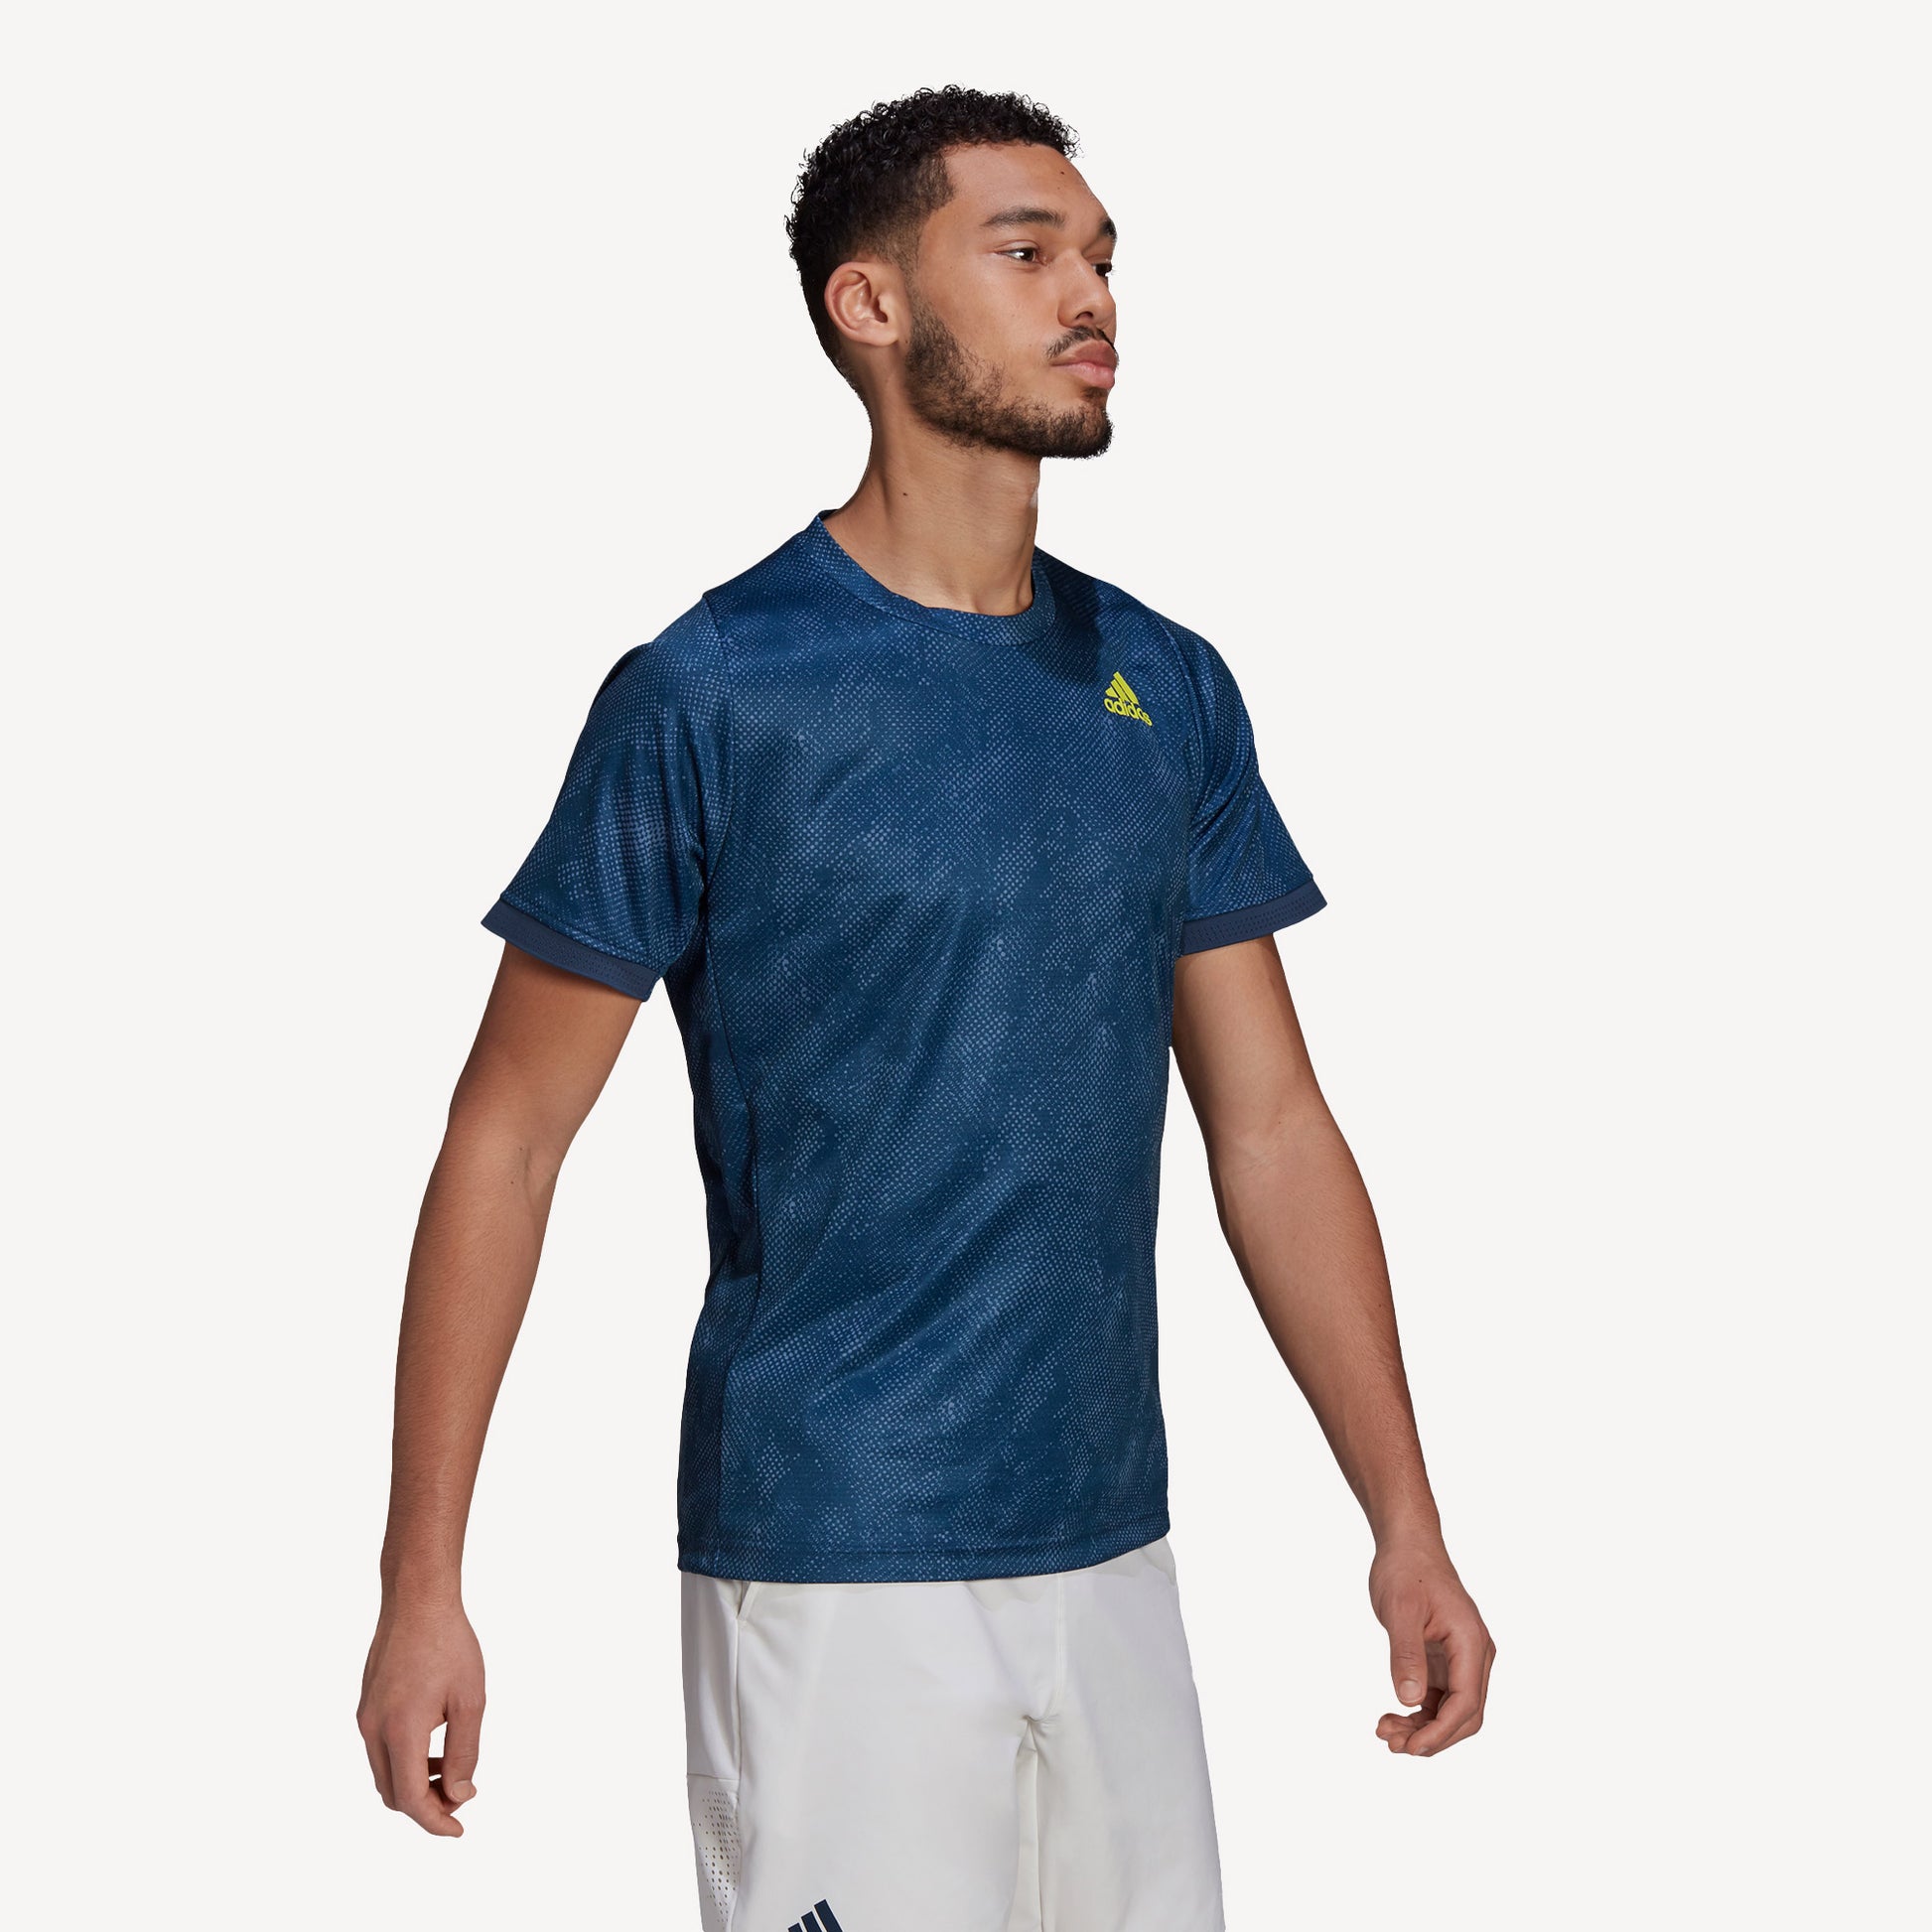 adidas Freelift Primeblue Men's Printed Tennis Shirt Blue (3)